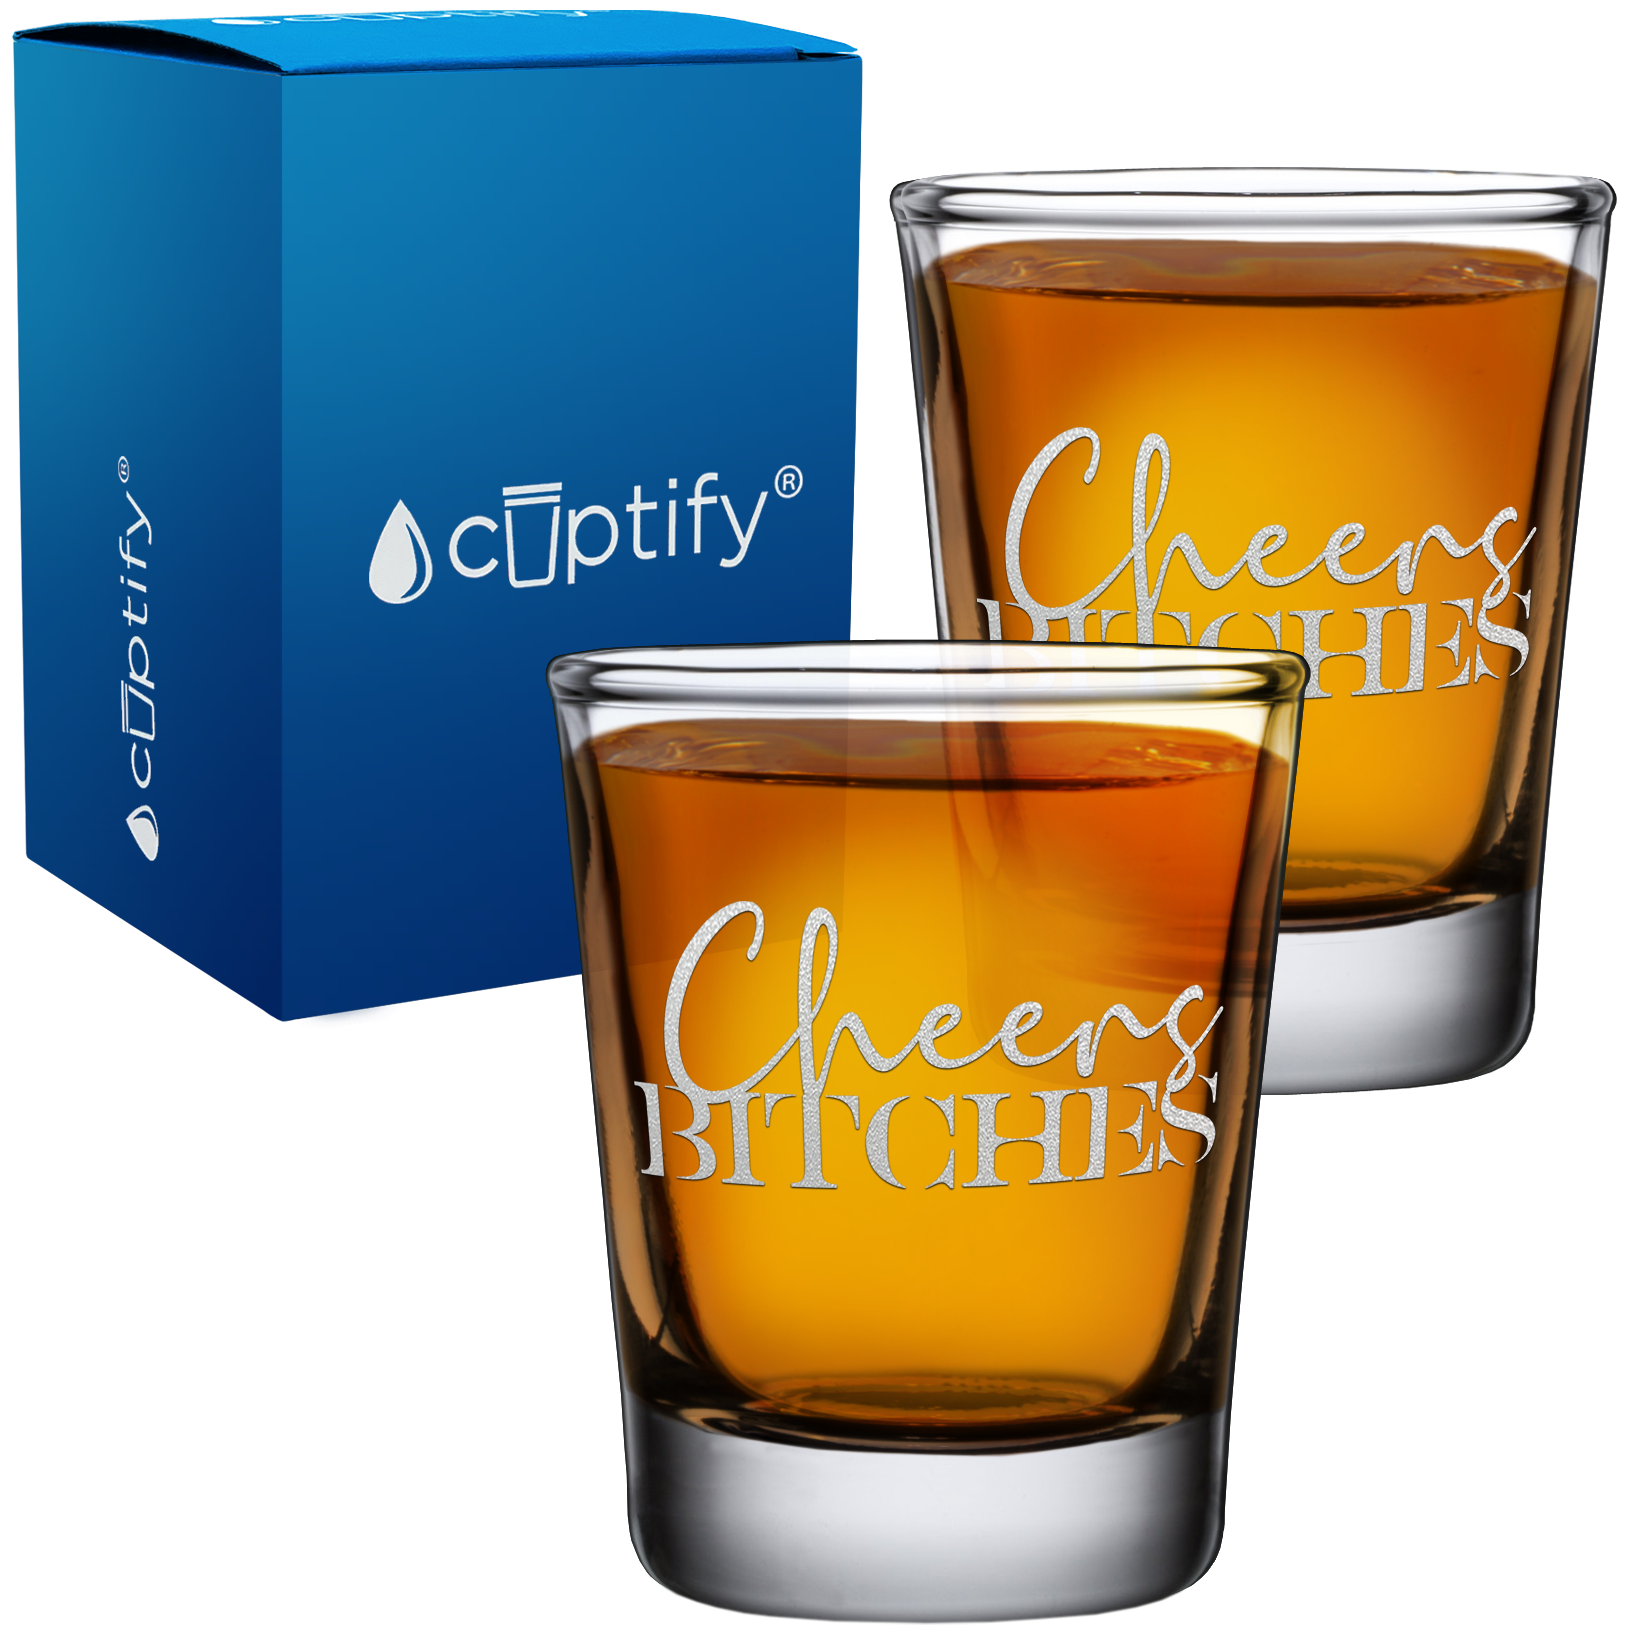 Cheers Bitches 2oz Shot Glasses - Set of 2